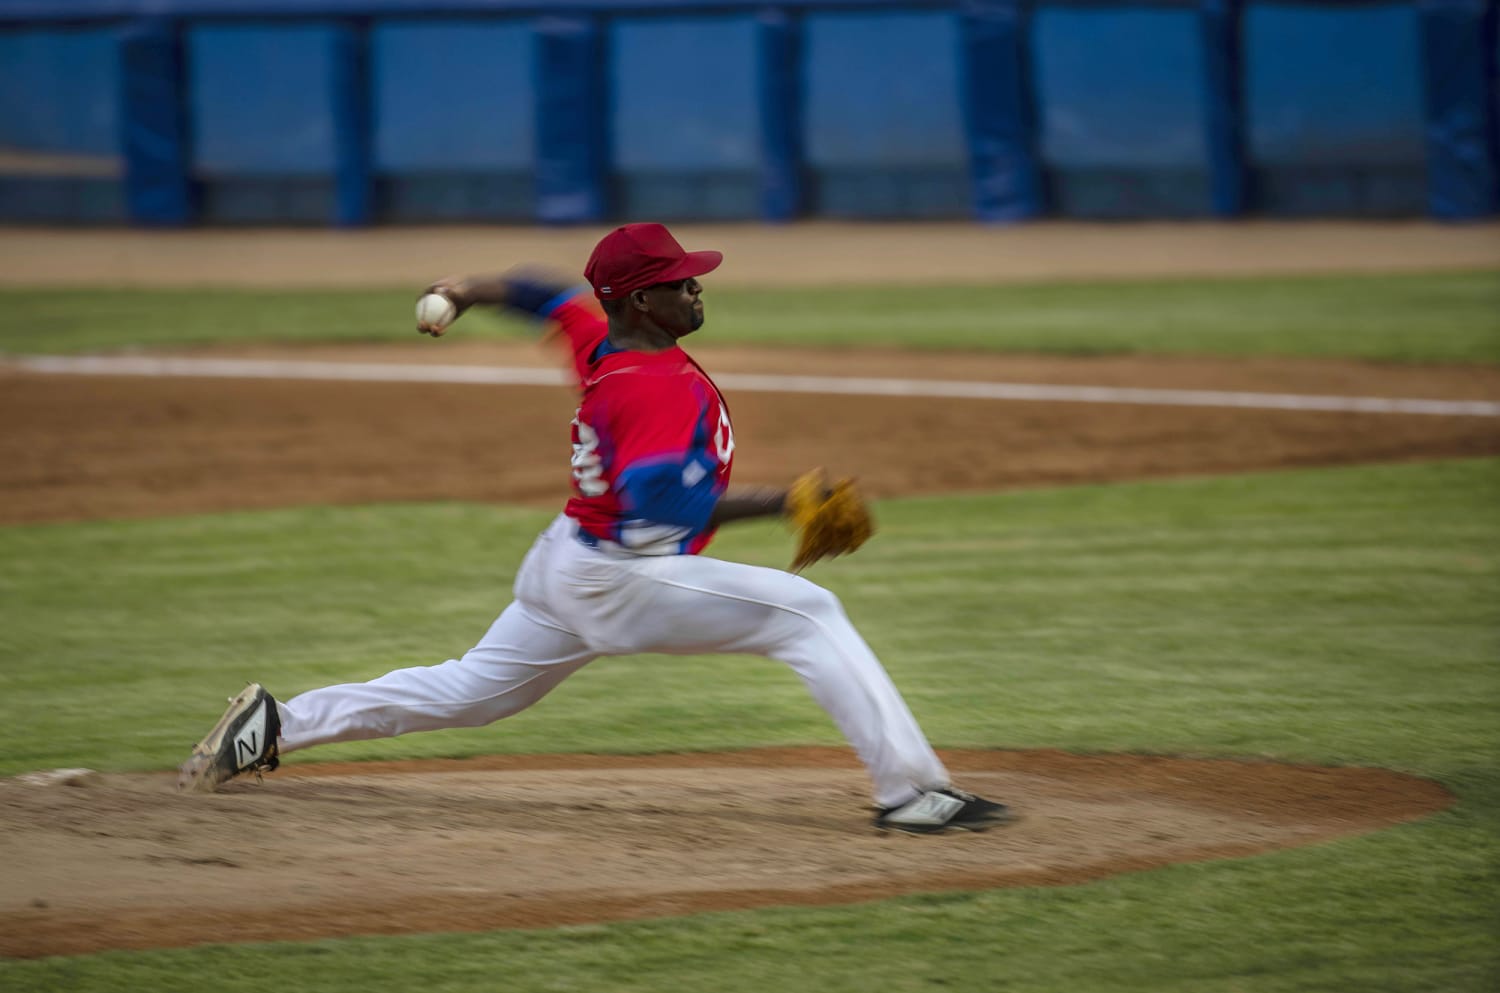 Cuba baseball team has no visas to travel to the U.S. as Olympic